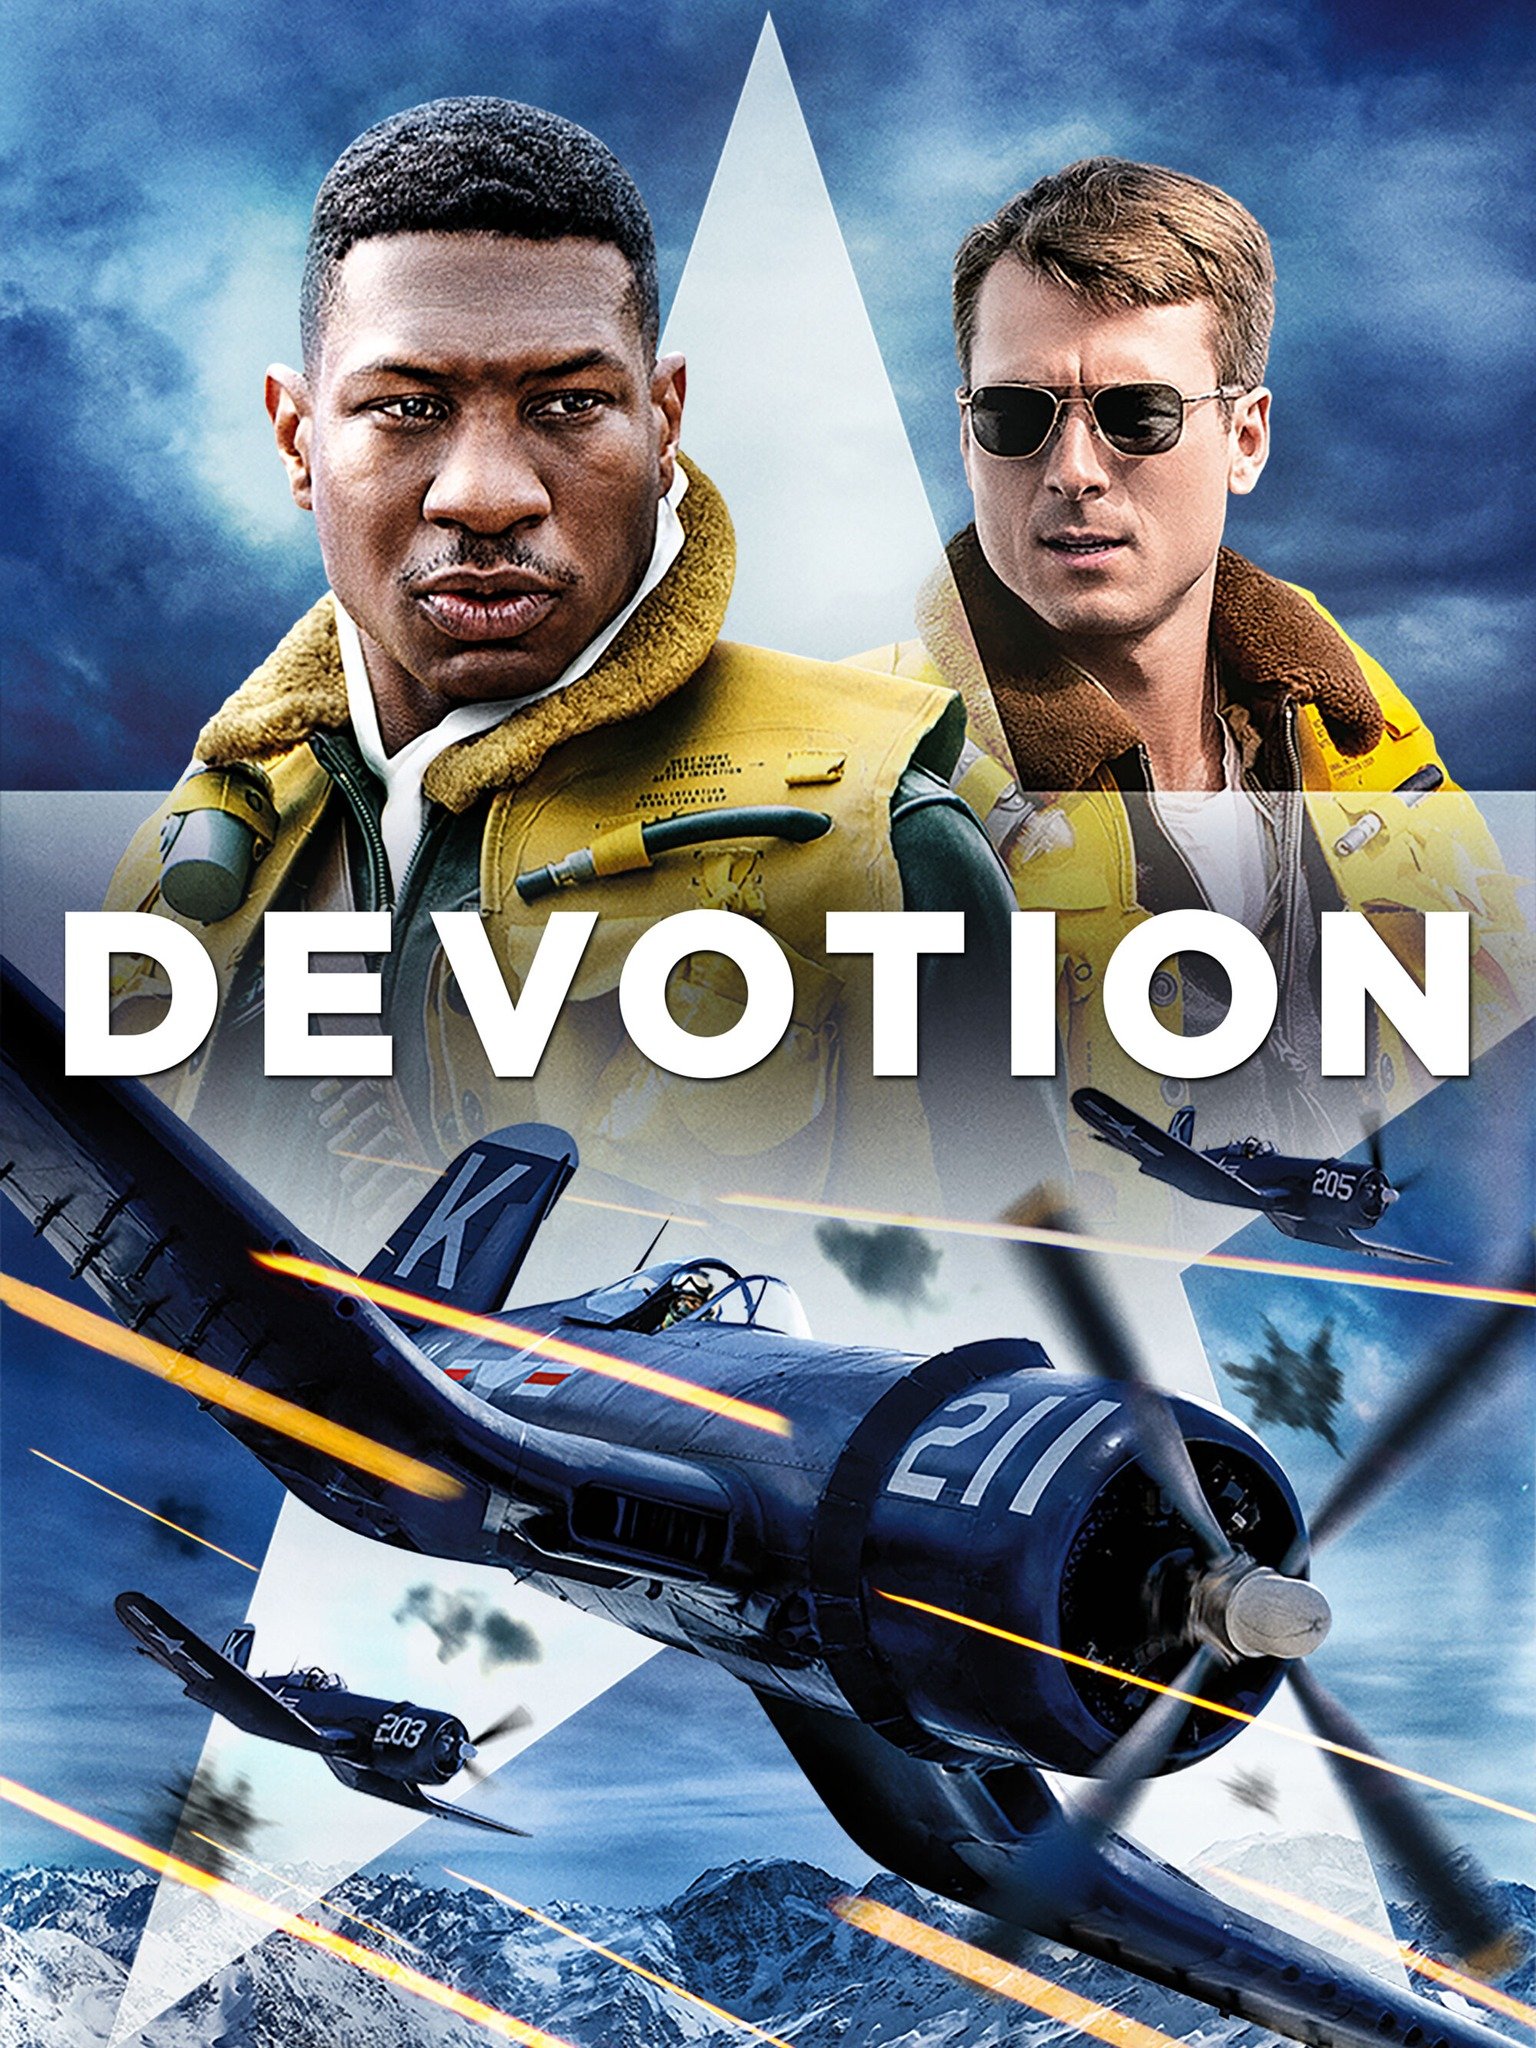 Devotion - Rotten Tomatoes